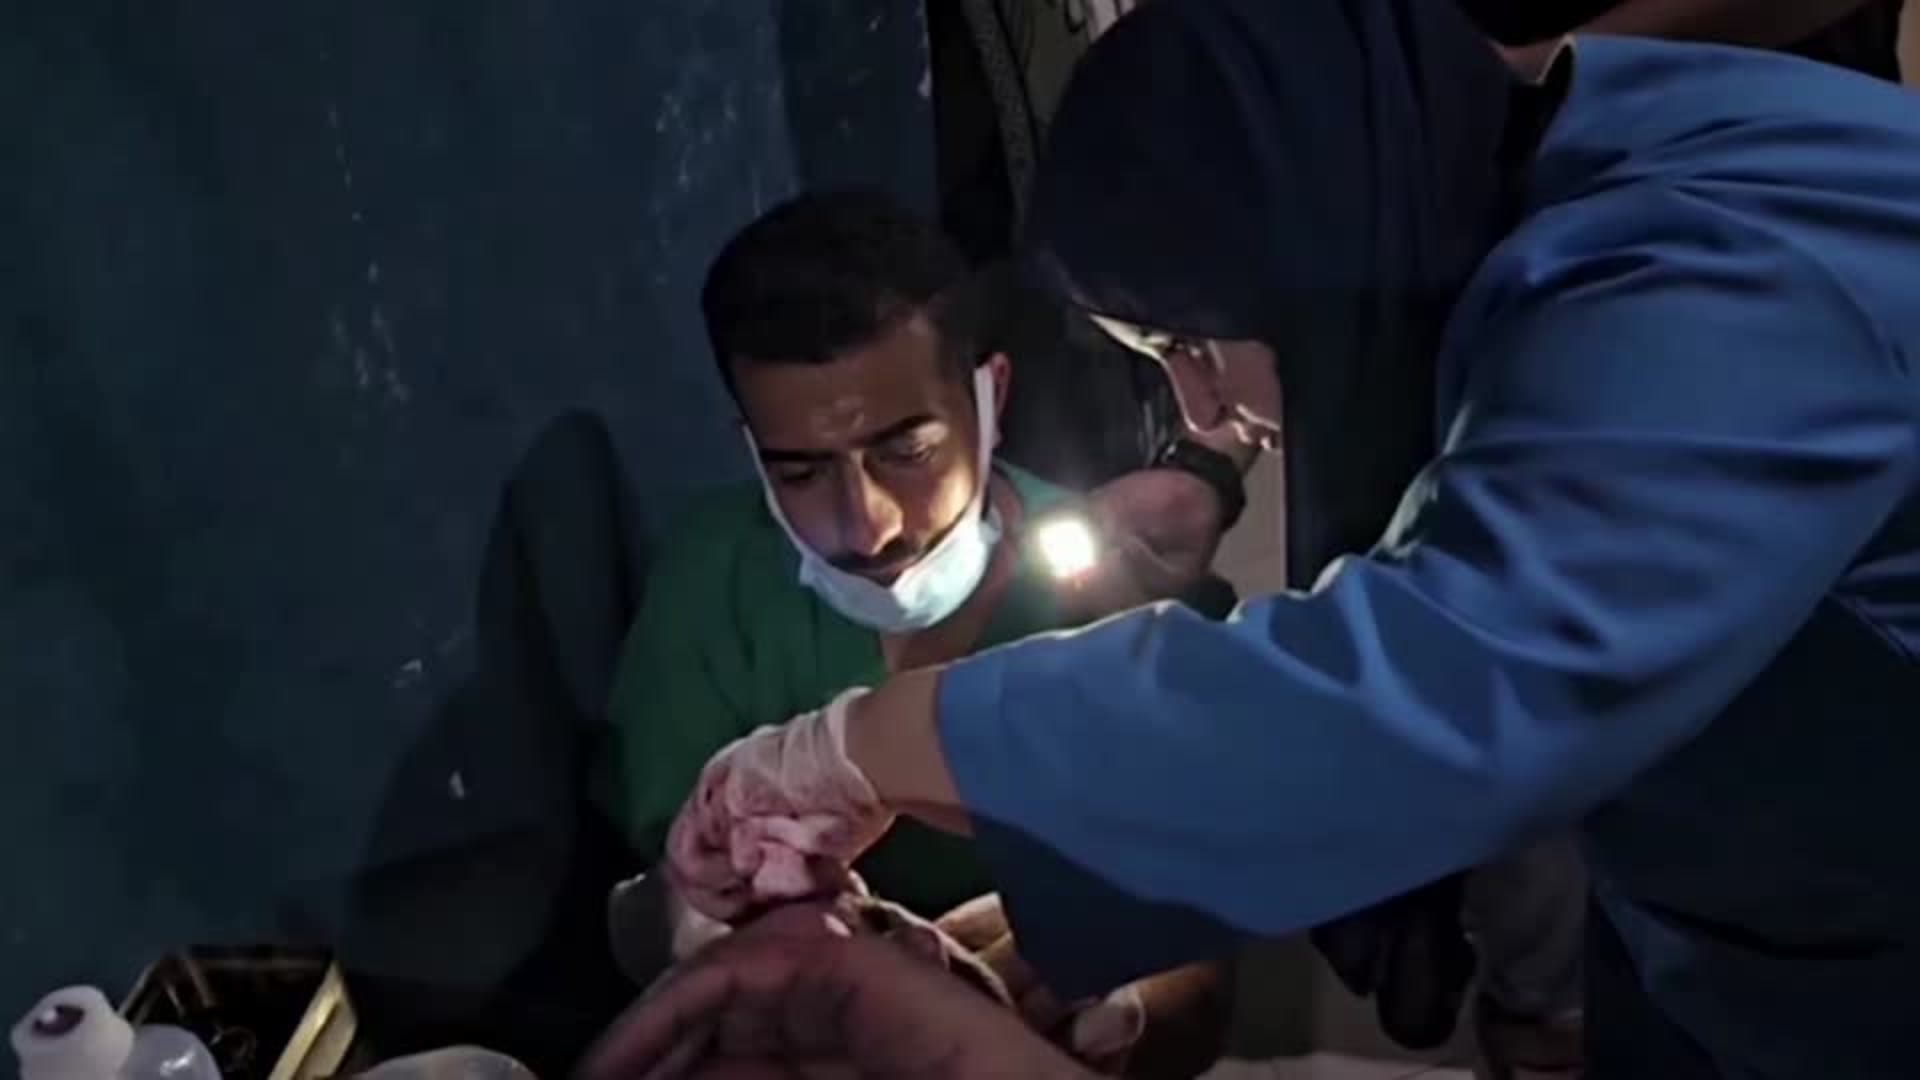 Medical team in Gaza's Indonesian hospital use flashlights amid power cut